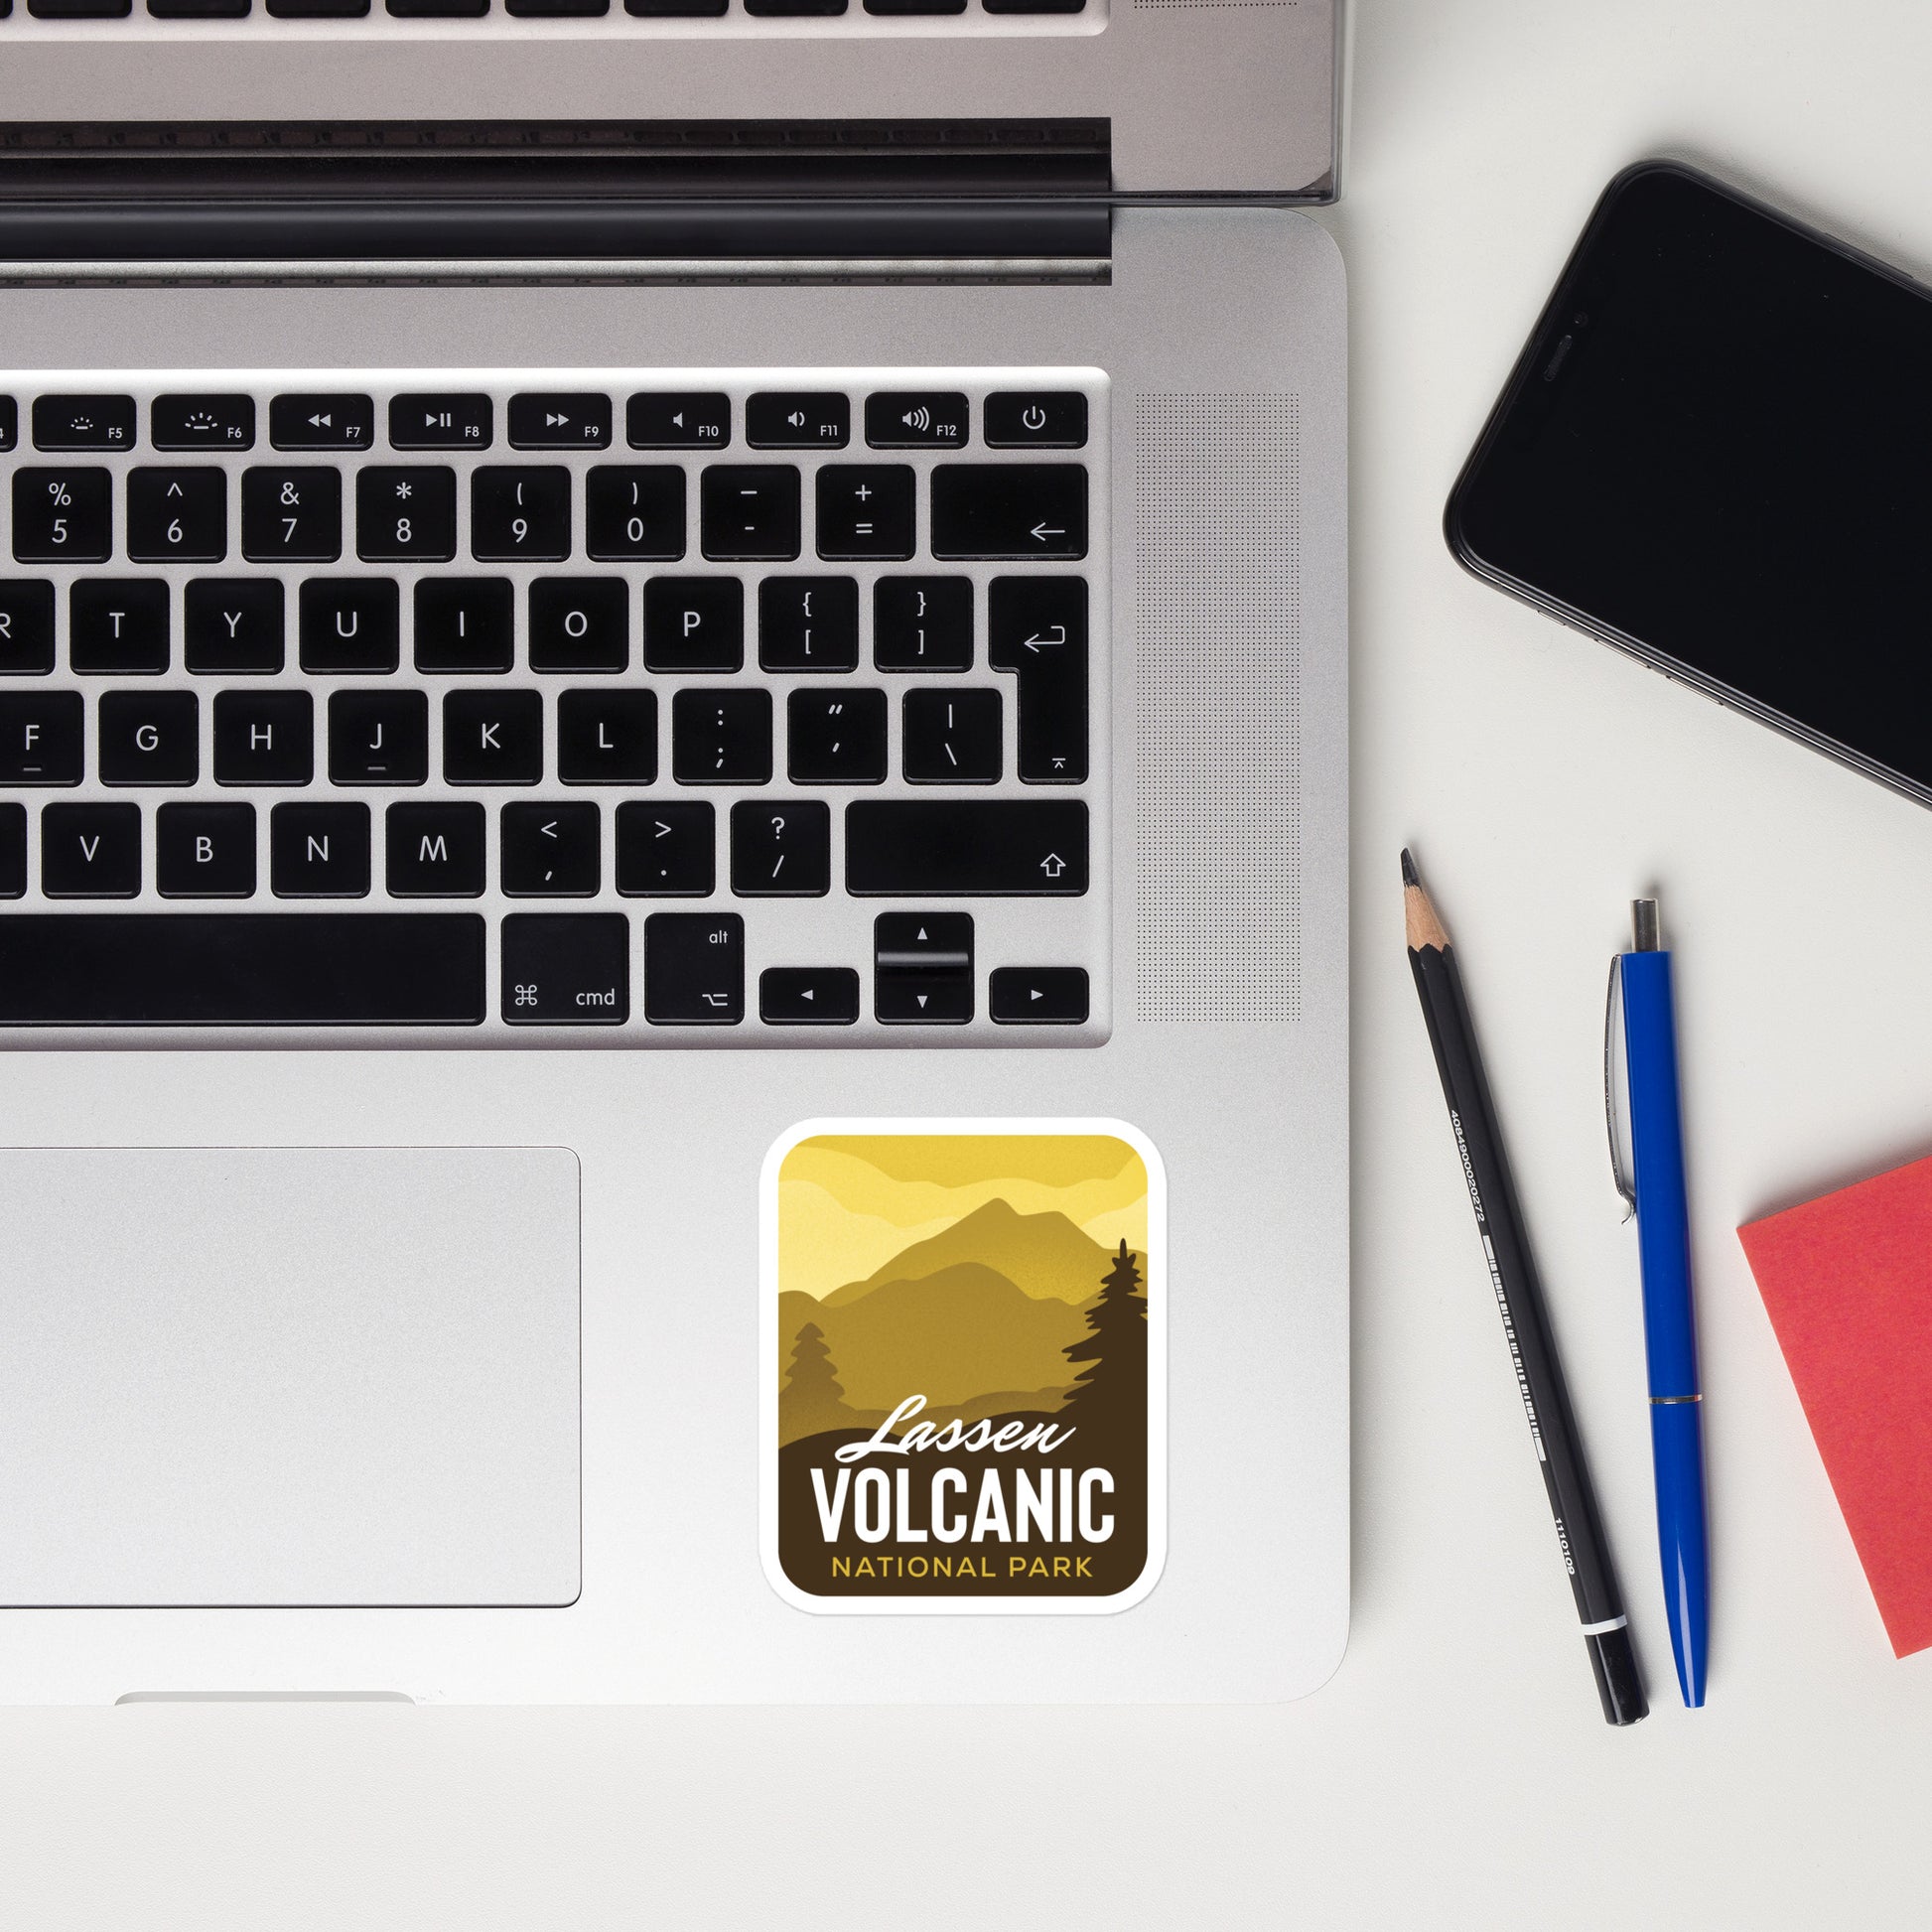 A sticker of Lassen Volcanic National Park on a laptop